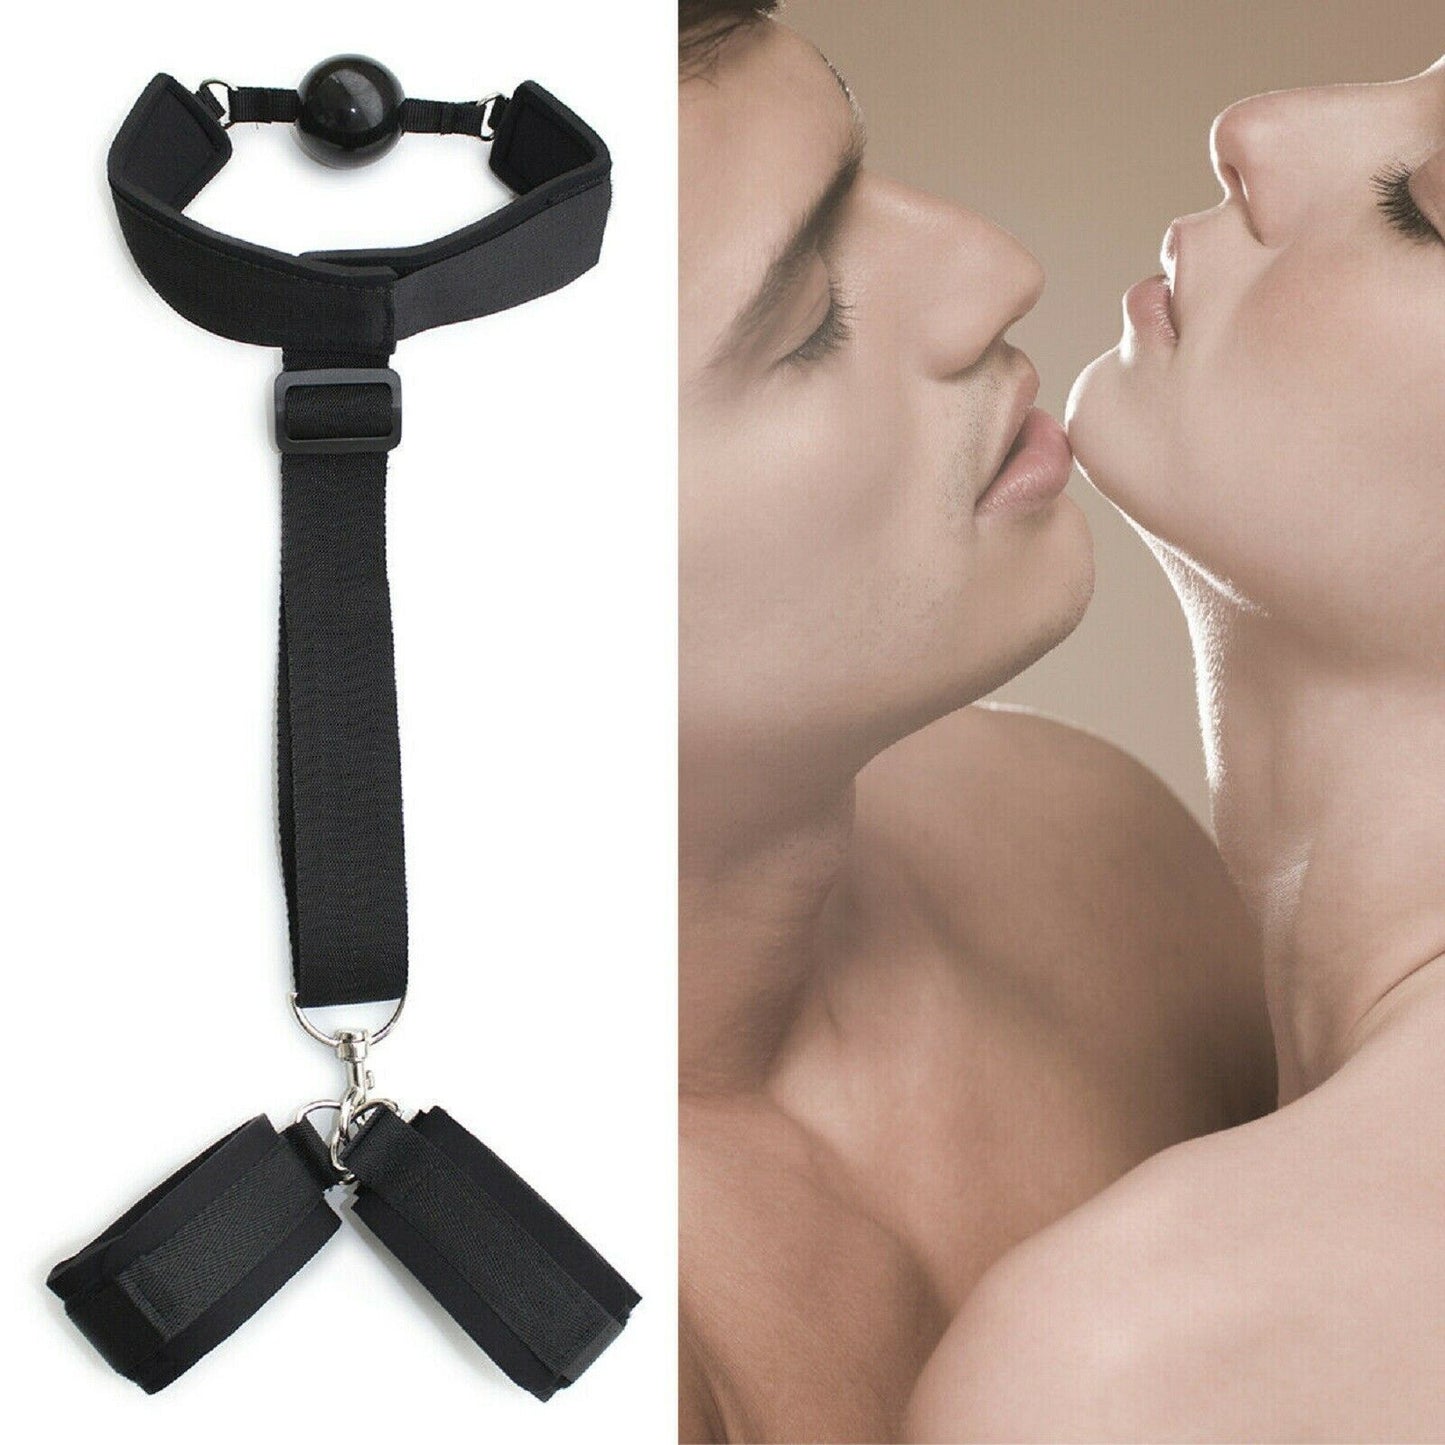 BDSM Mouth Gag Ball Bondage Restraint Kit Wrist Collar Handcuff Couples Sex Toy